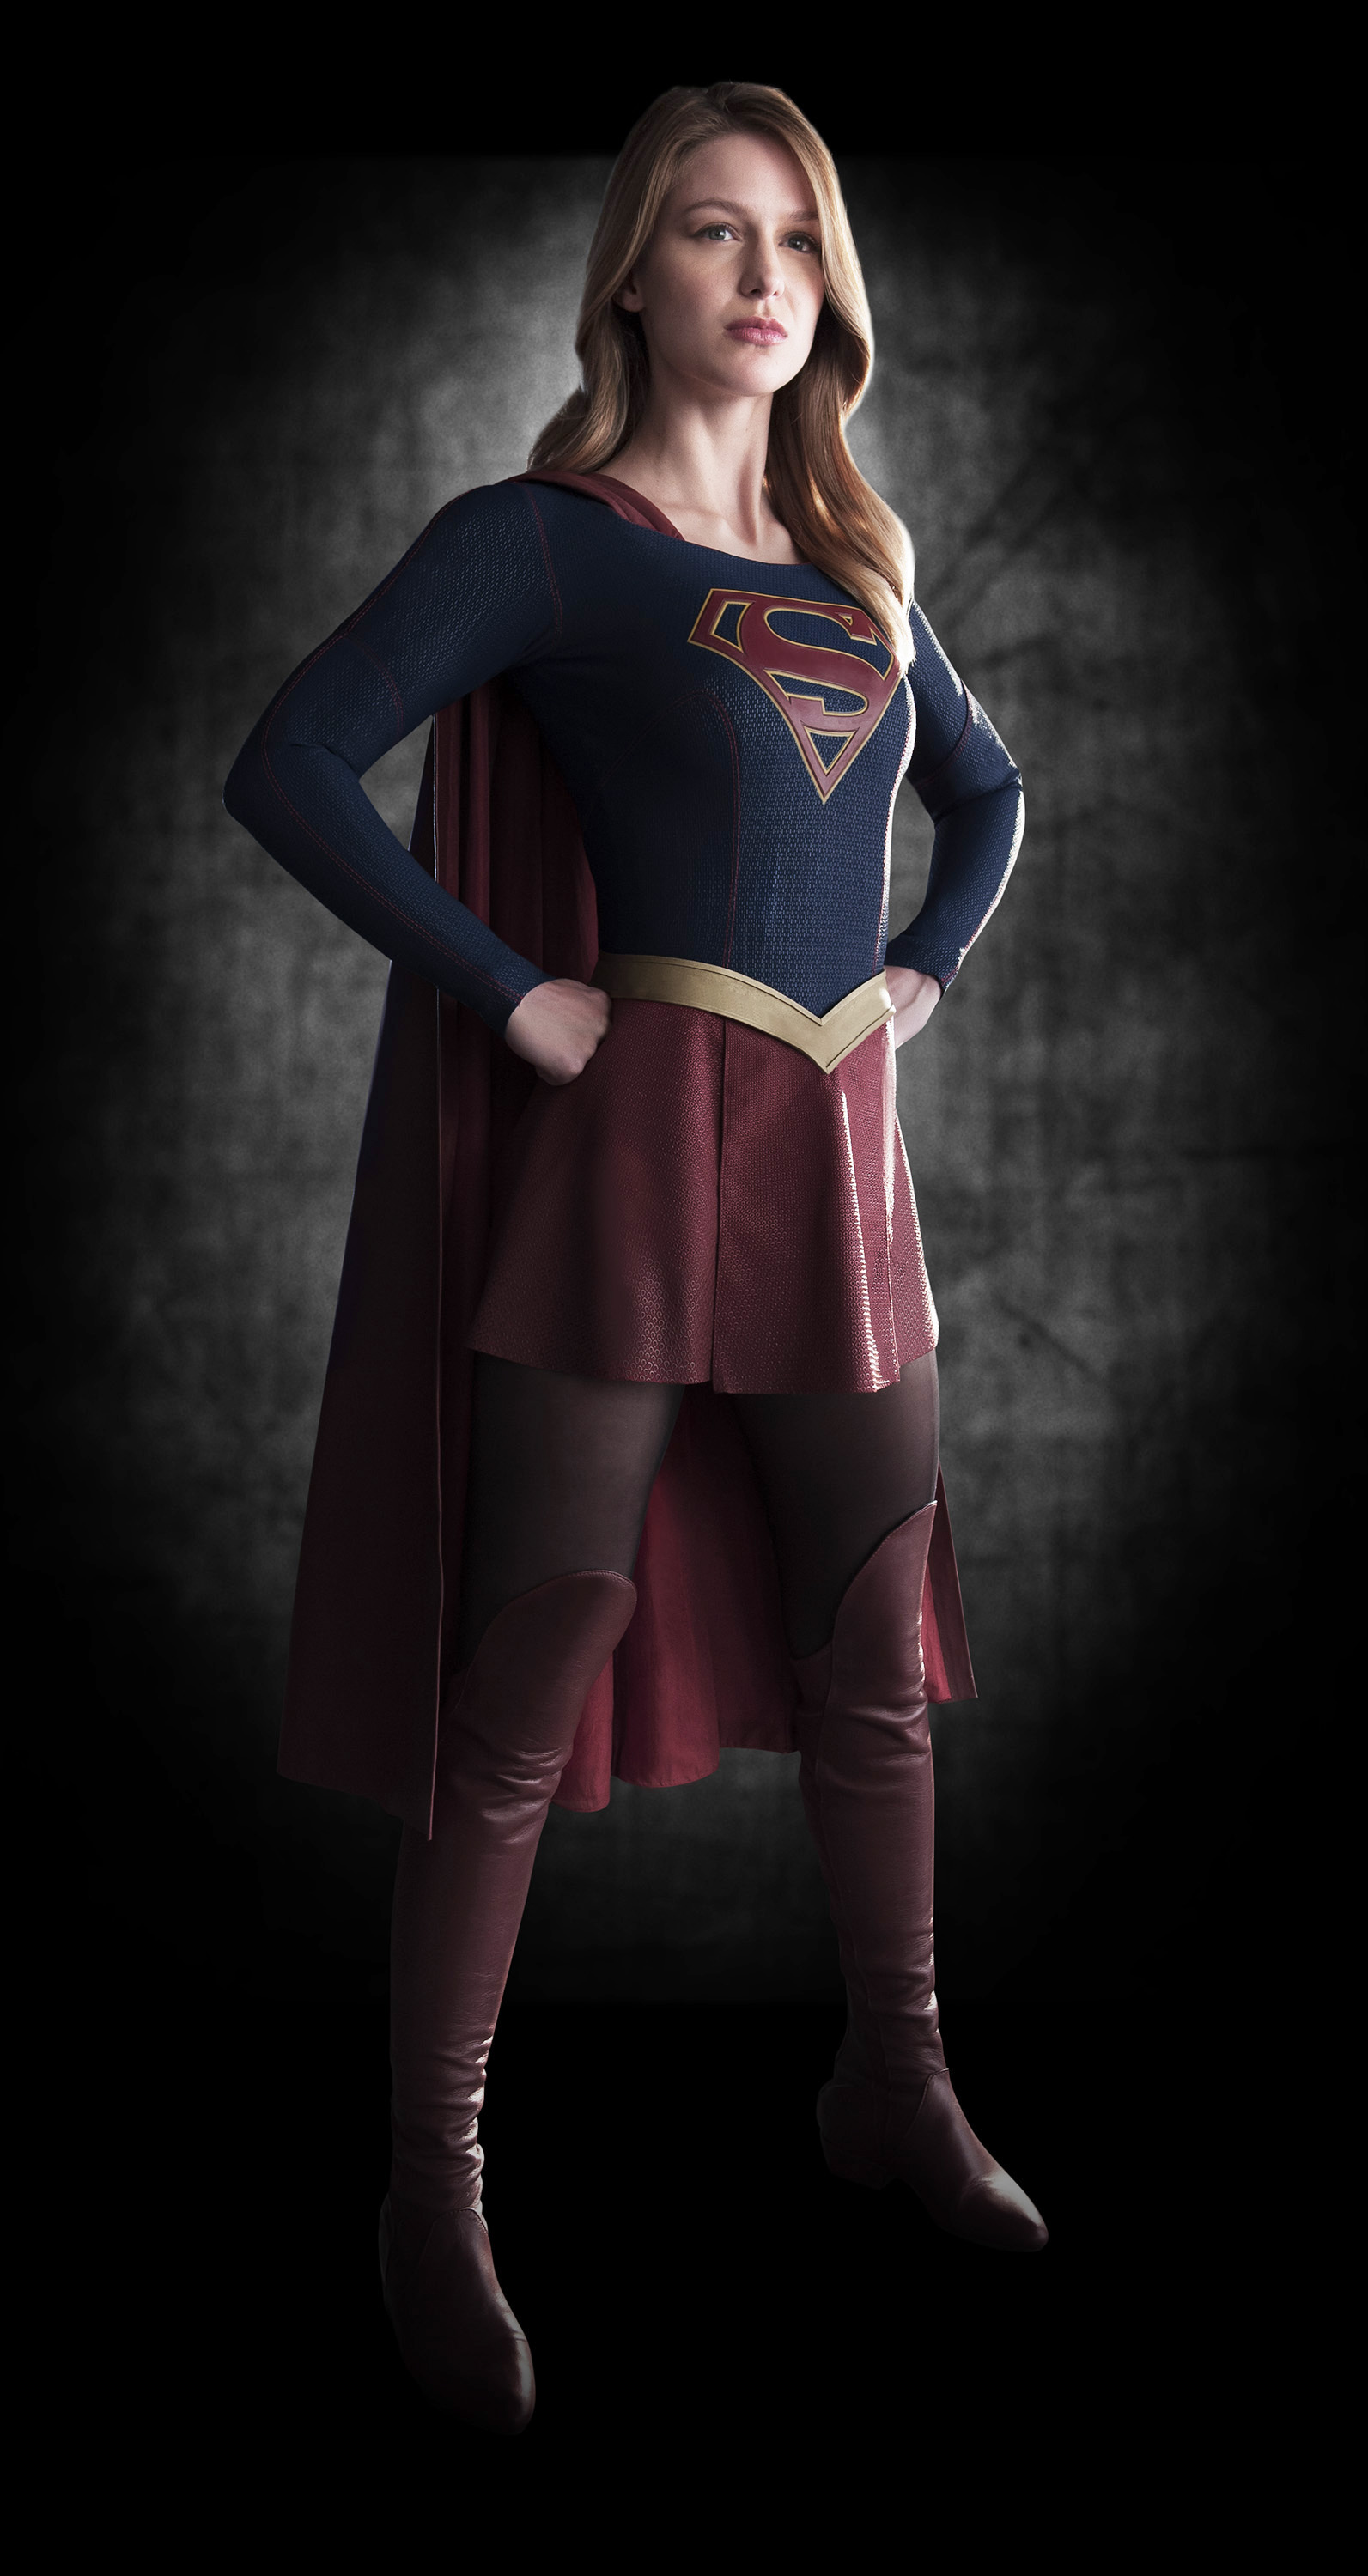 jsou-tu-prvni-fotky-k-novemu-serialu-supergirl